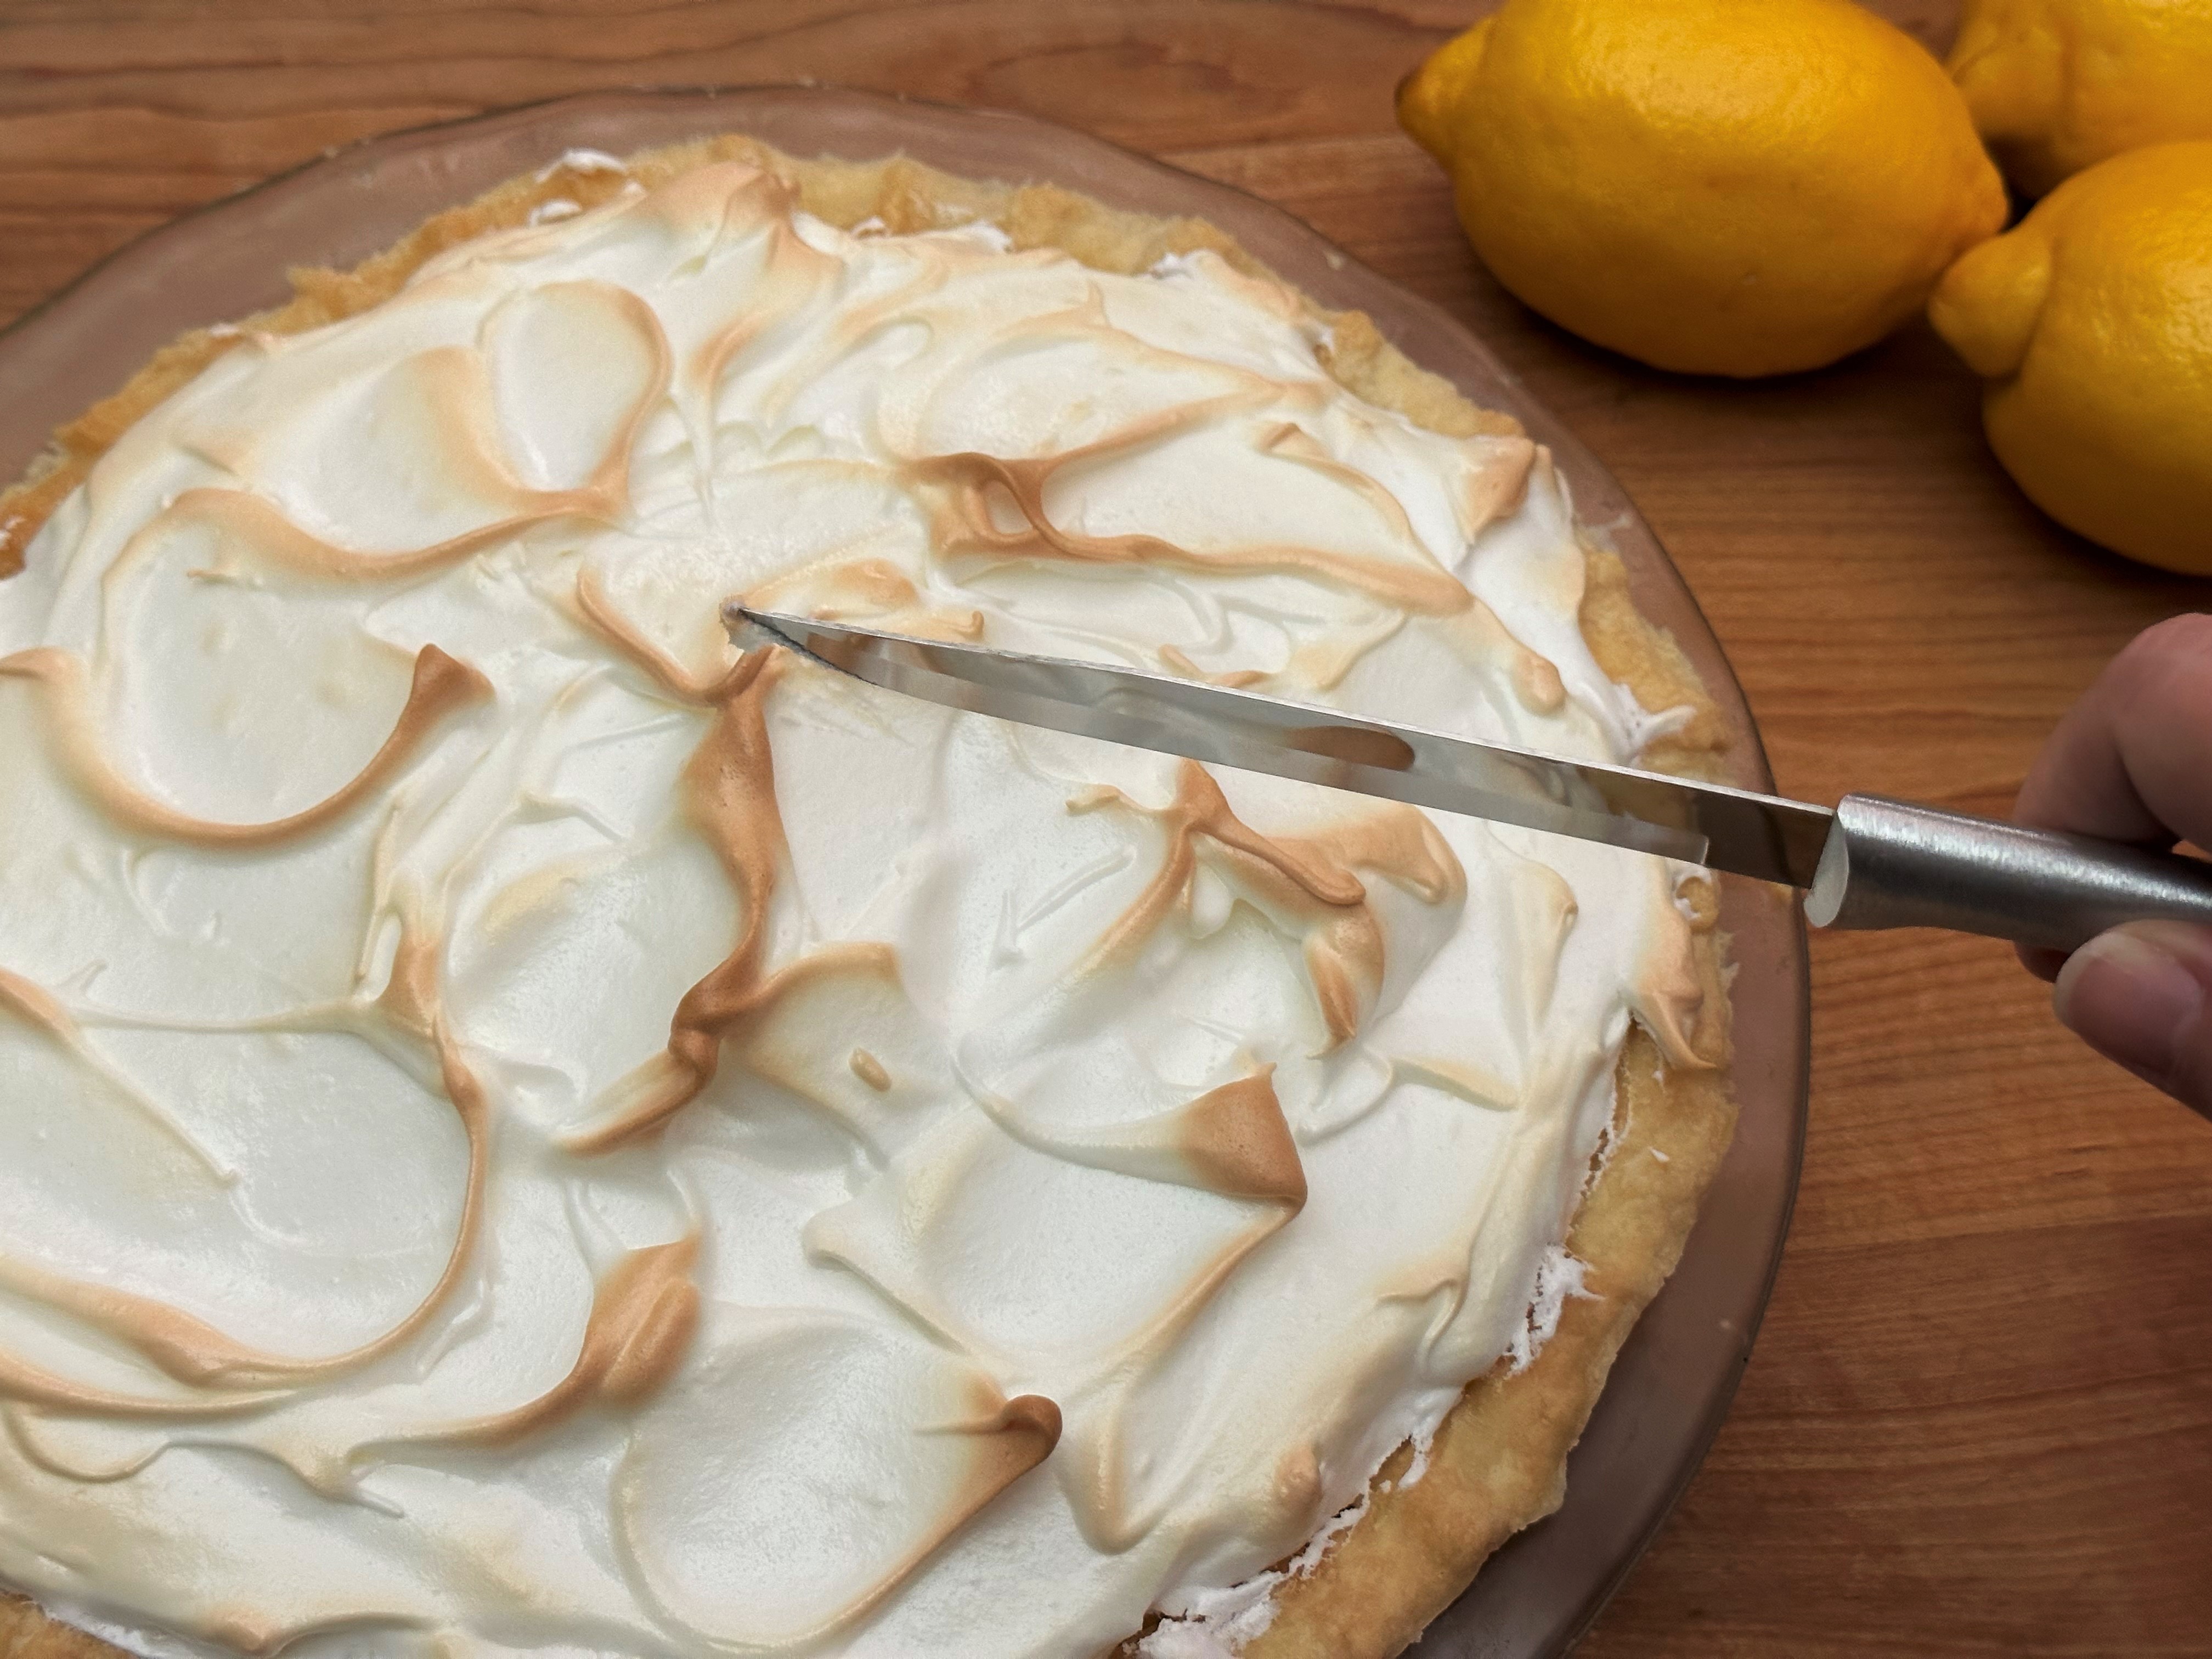 Slicing a lemon meringue pie